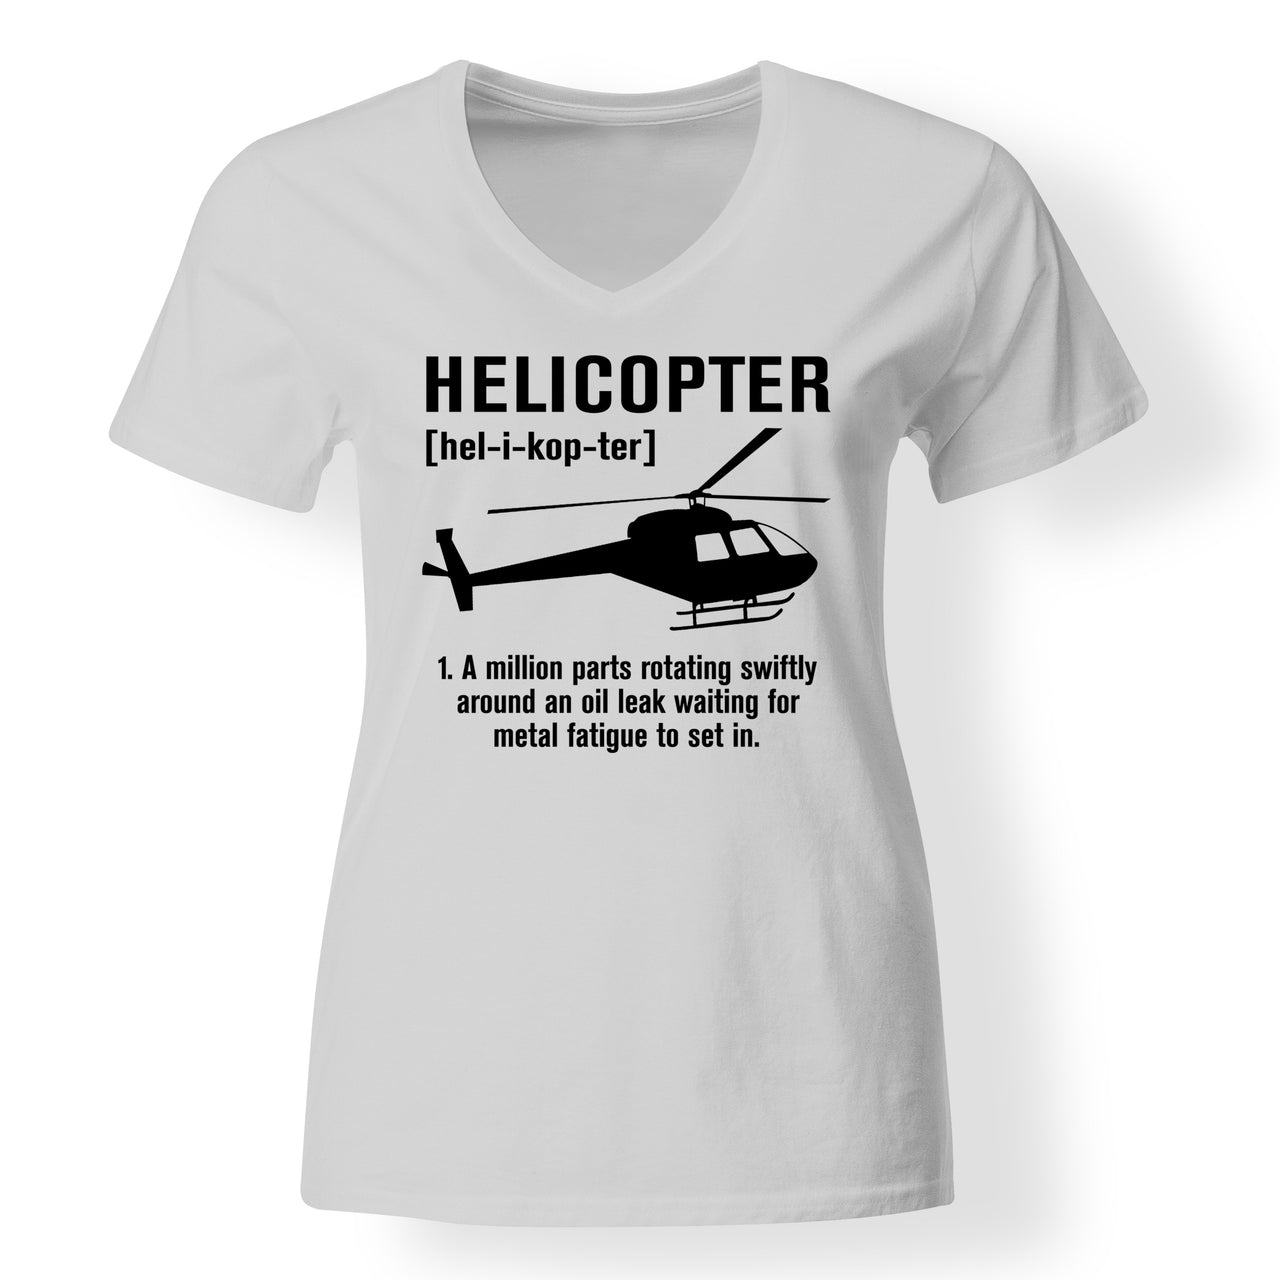 Helicopter [Noun] Designed V-Neck T-Shirts